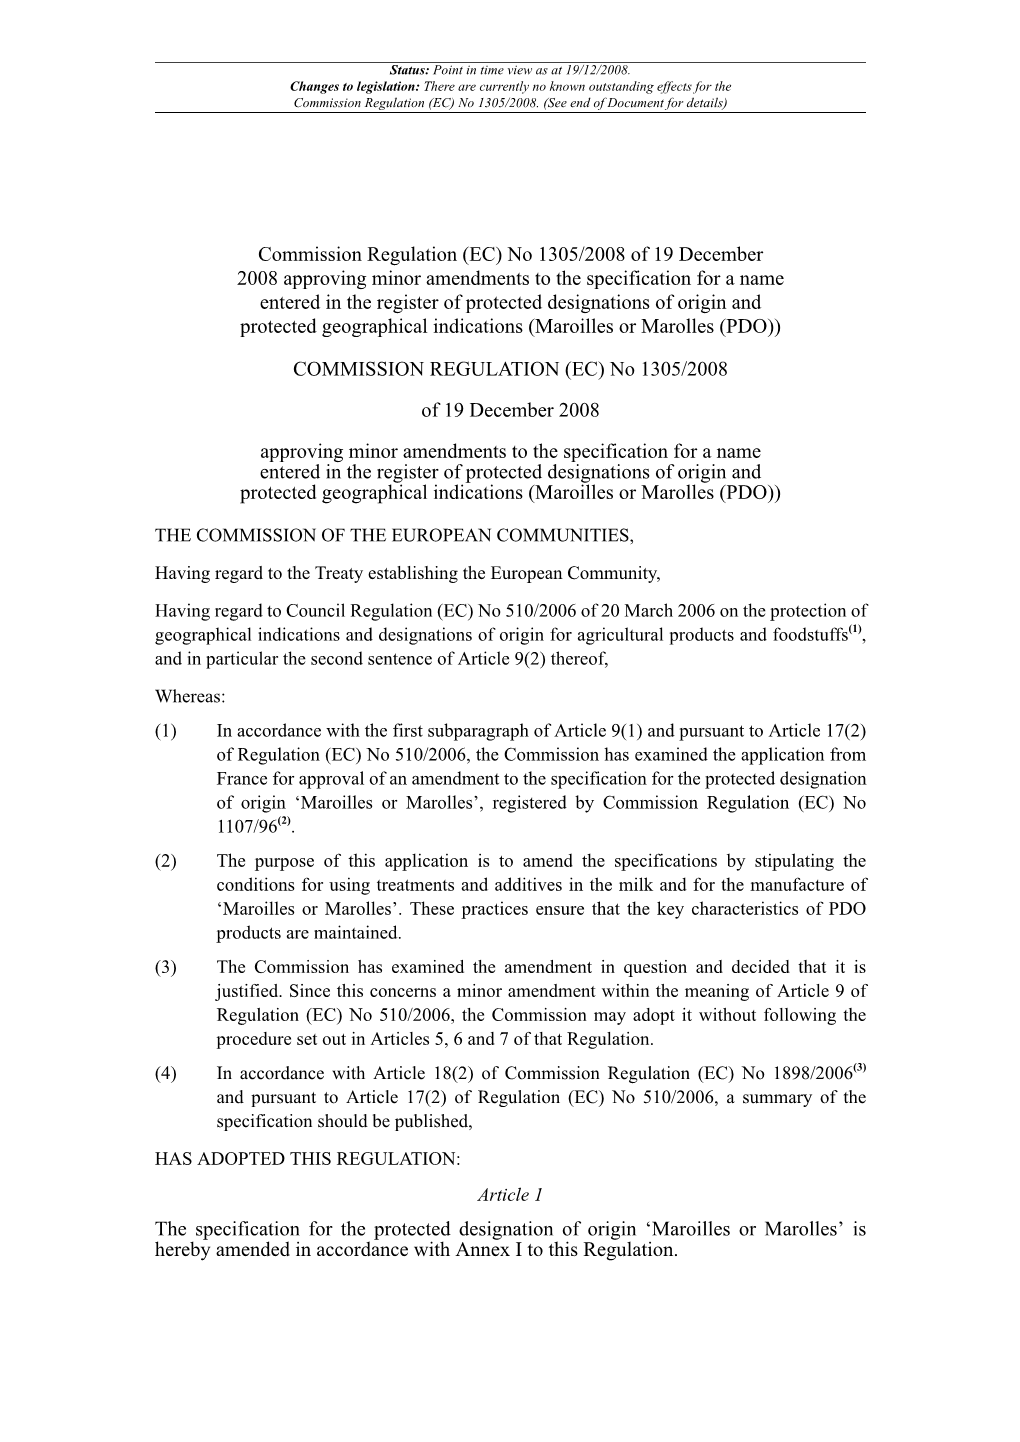 Commission Regulation (EC) No 1305/2008 Of